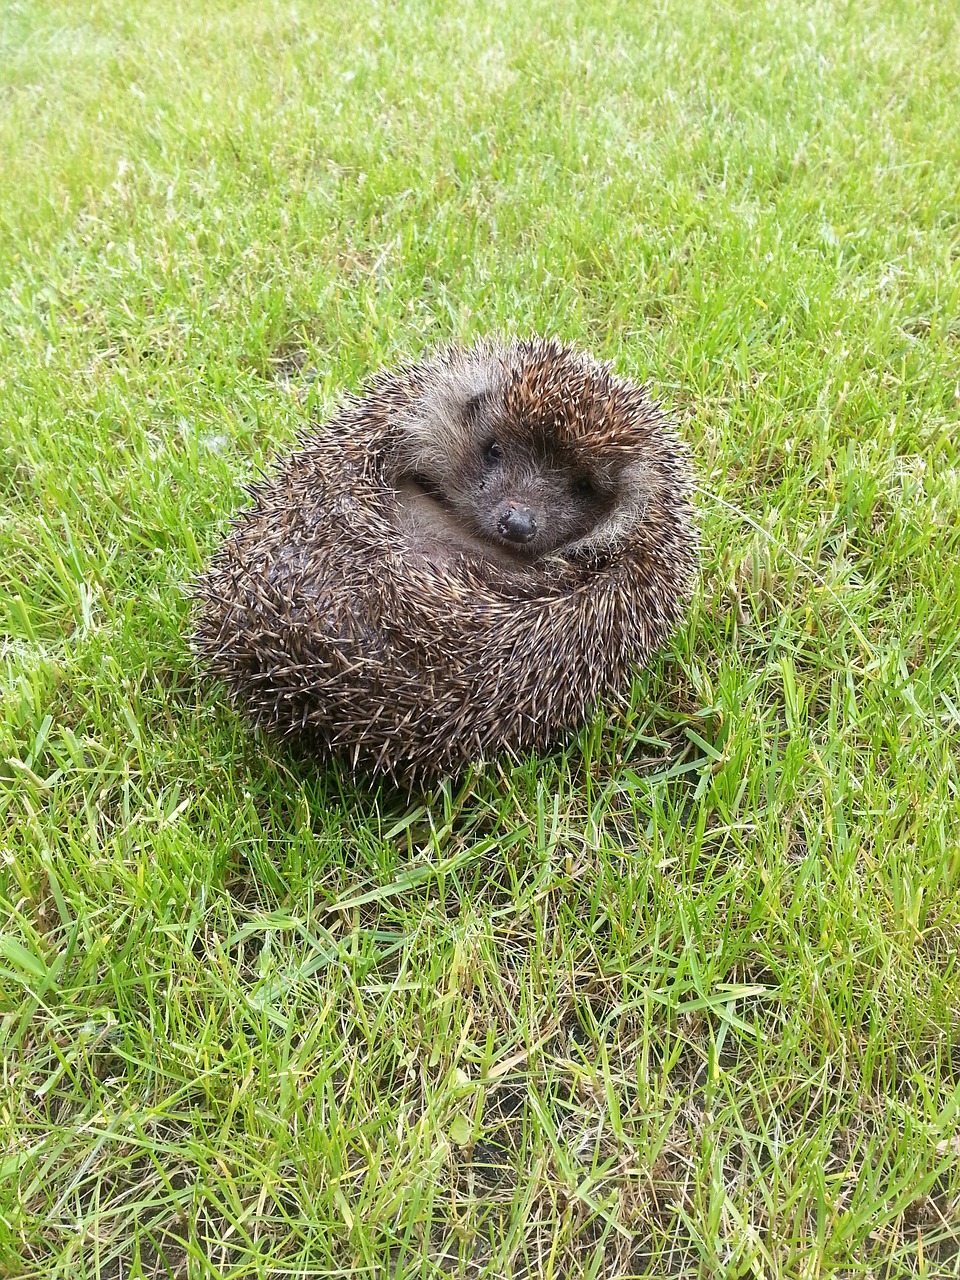 third showing a hedgehog cute prickly animal free photo